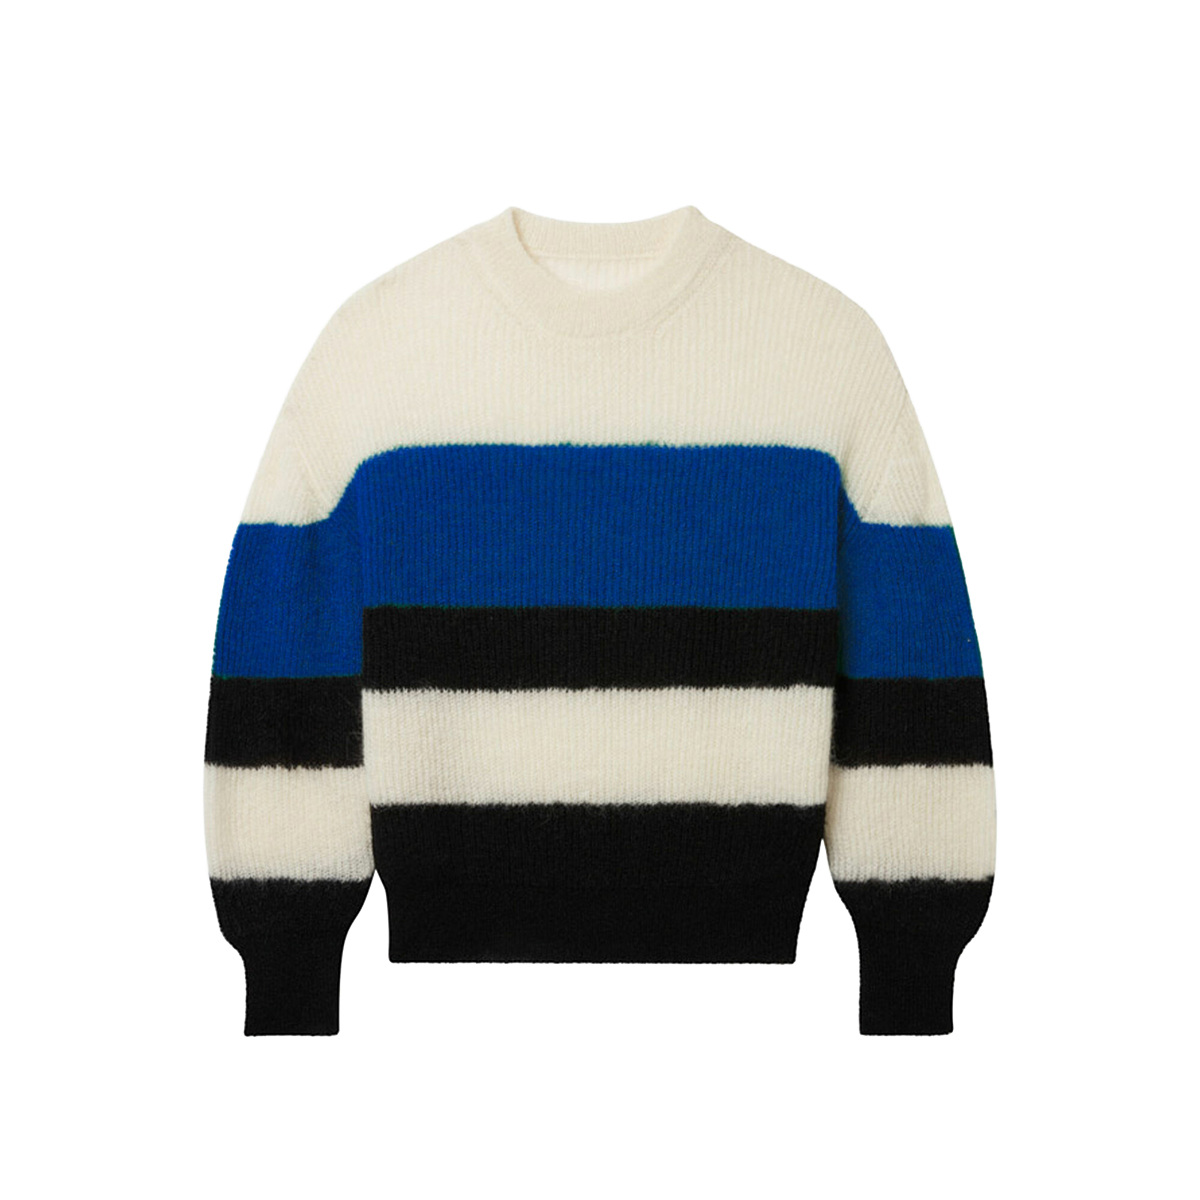 Sweater Torino, Round neck - Ecru, Indigo and Black - Mohair and Alpaca - image 1